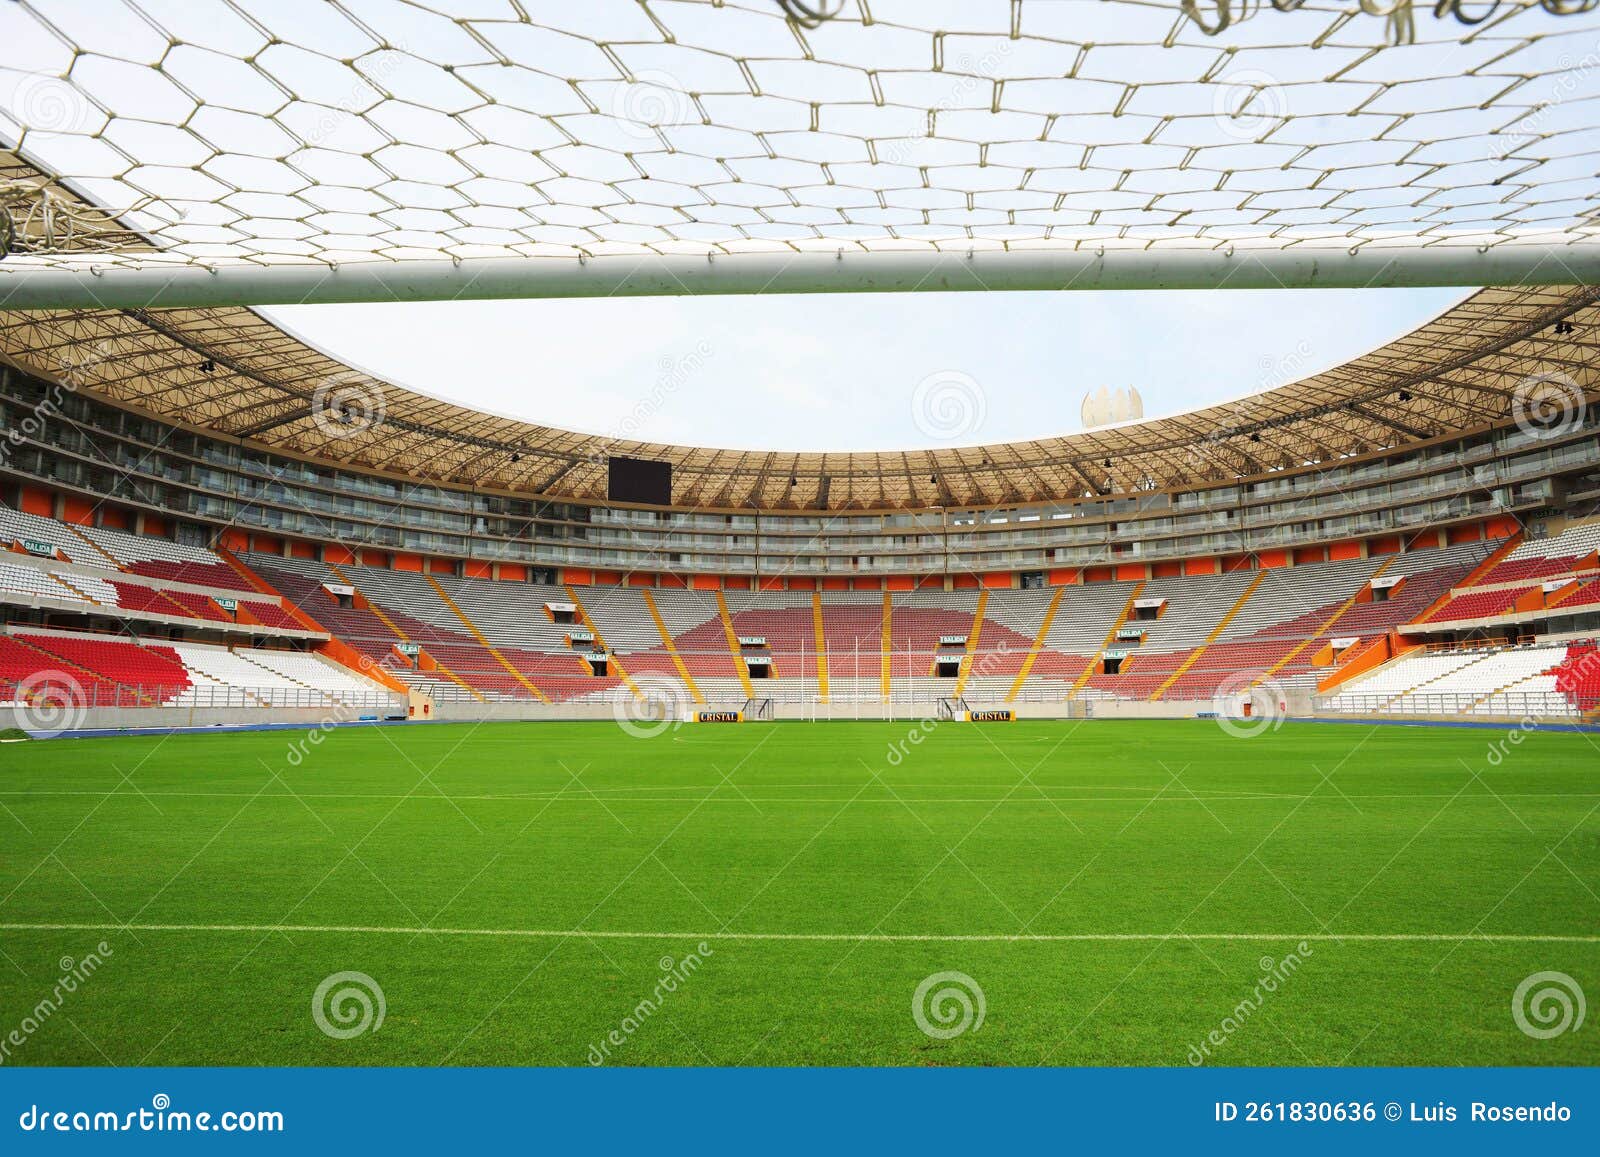 lima peru,new architecture of the field foodball soccer stadium- called national stadium